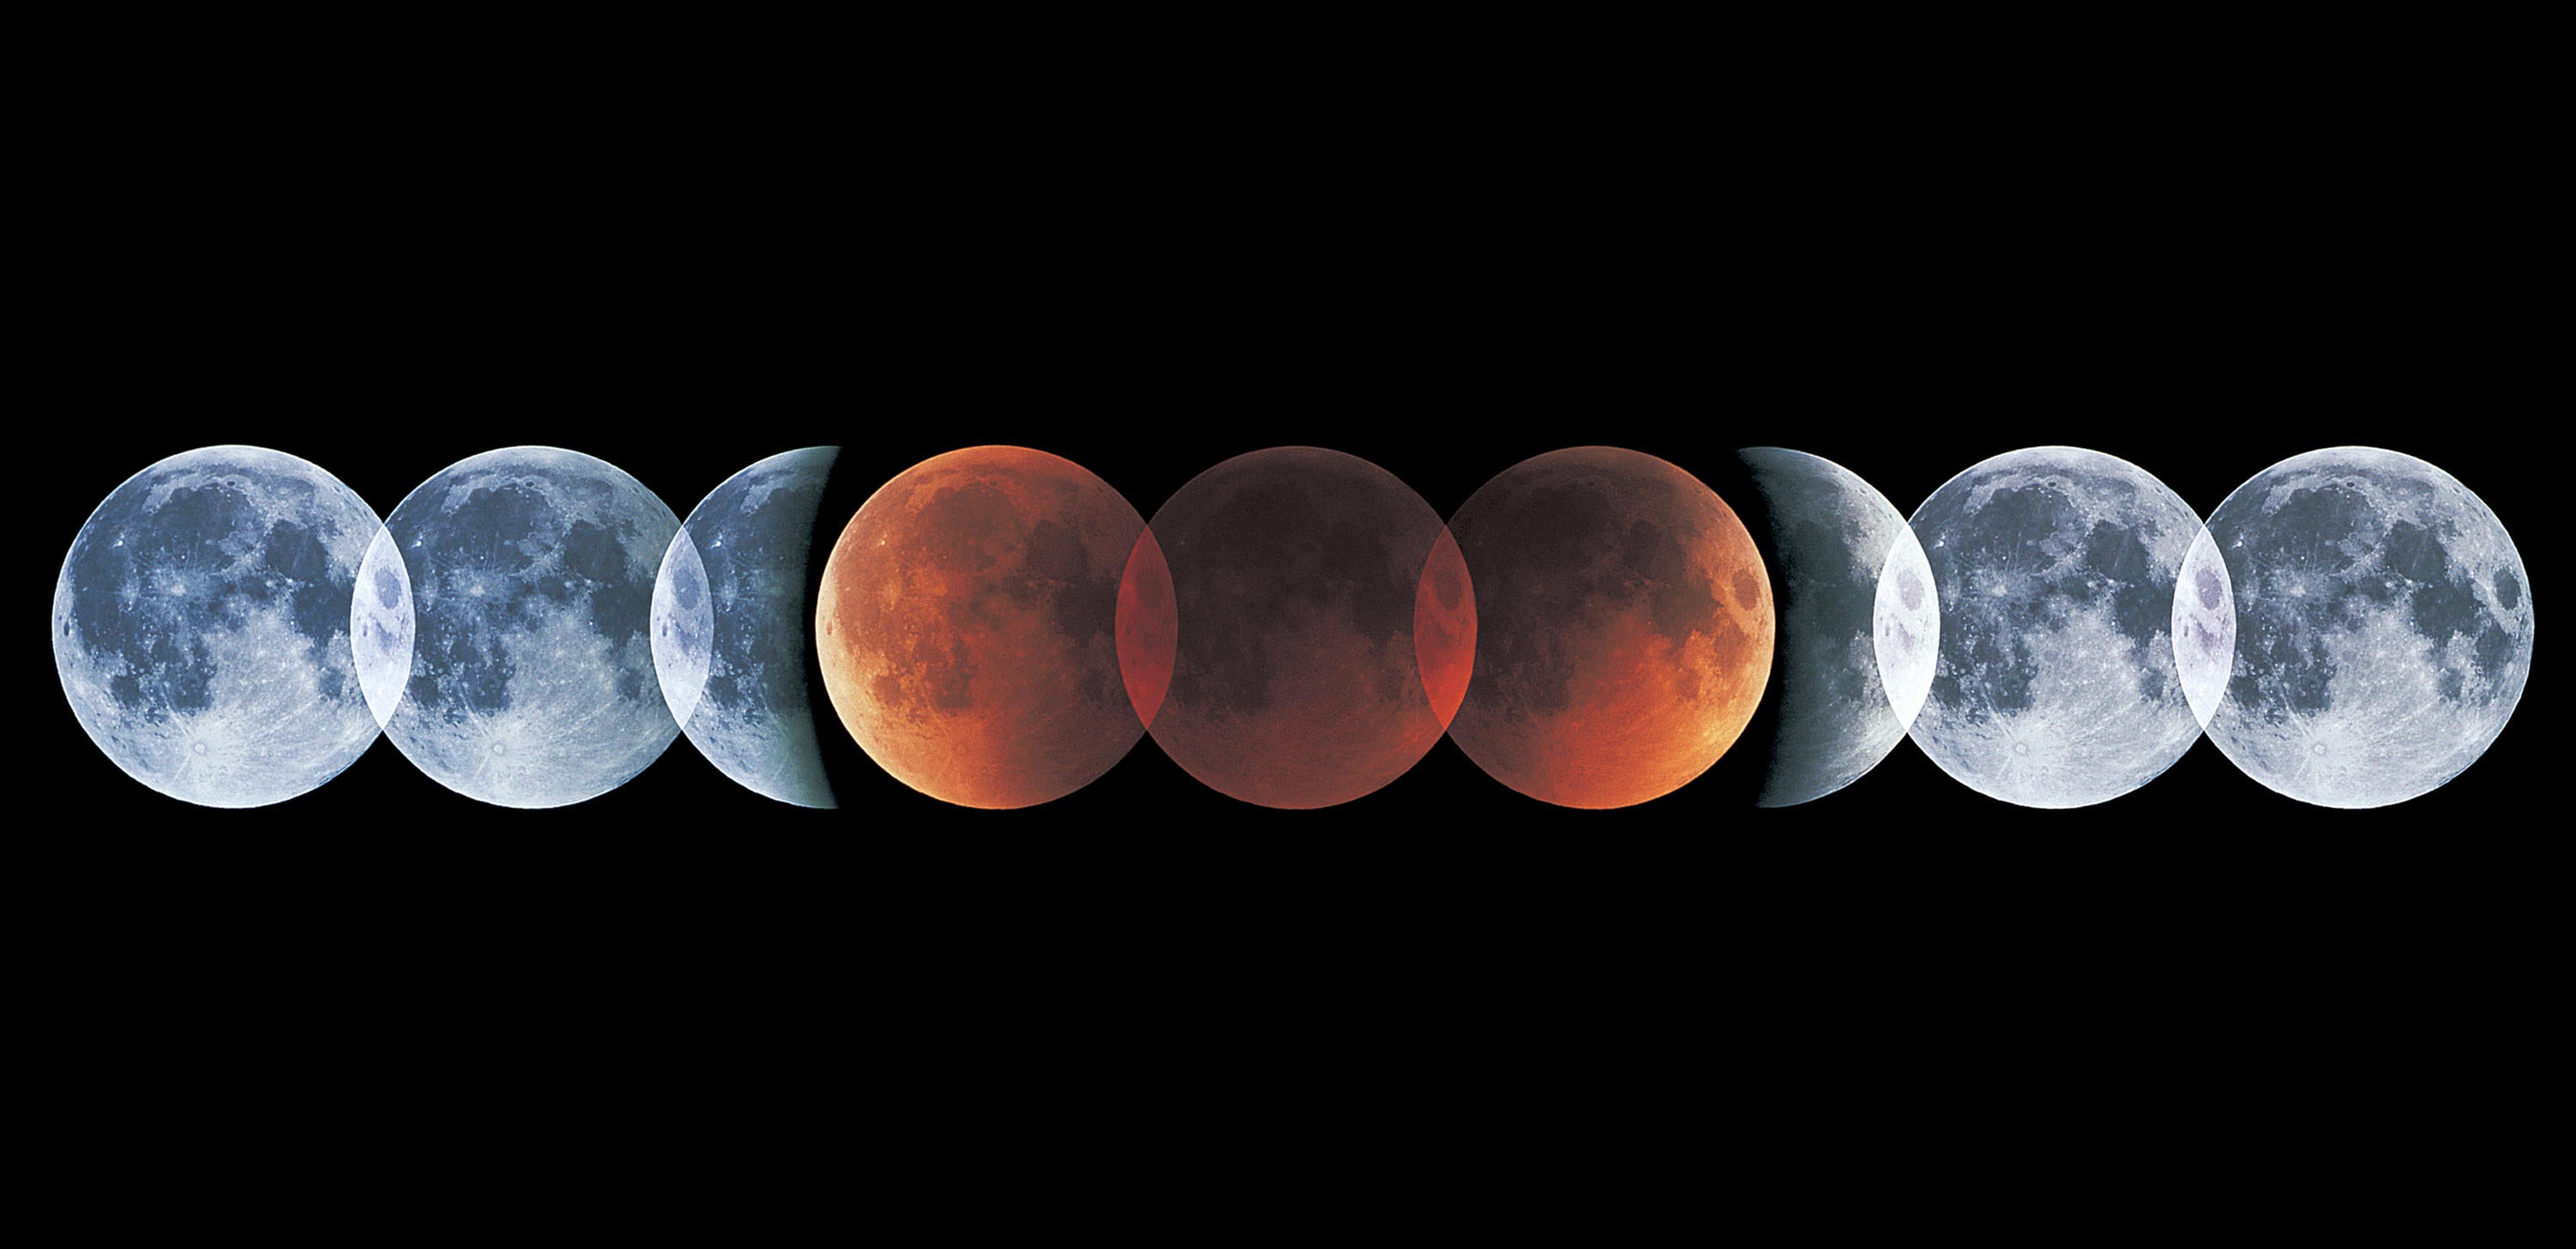 Lunar eclipse progression (Credit: Sky & Telescope / Akira Fujii)